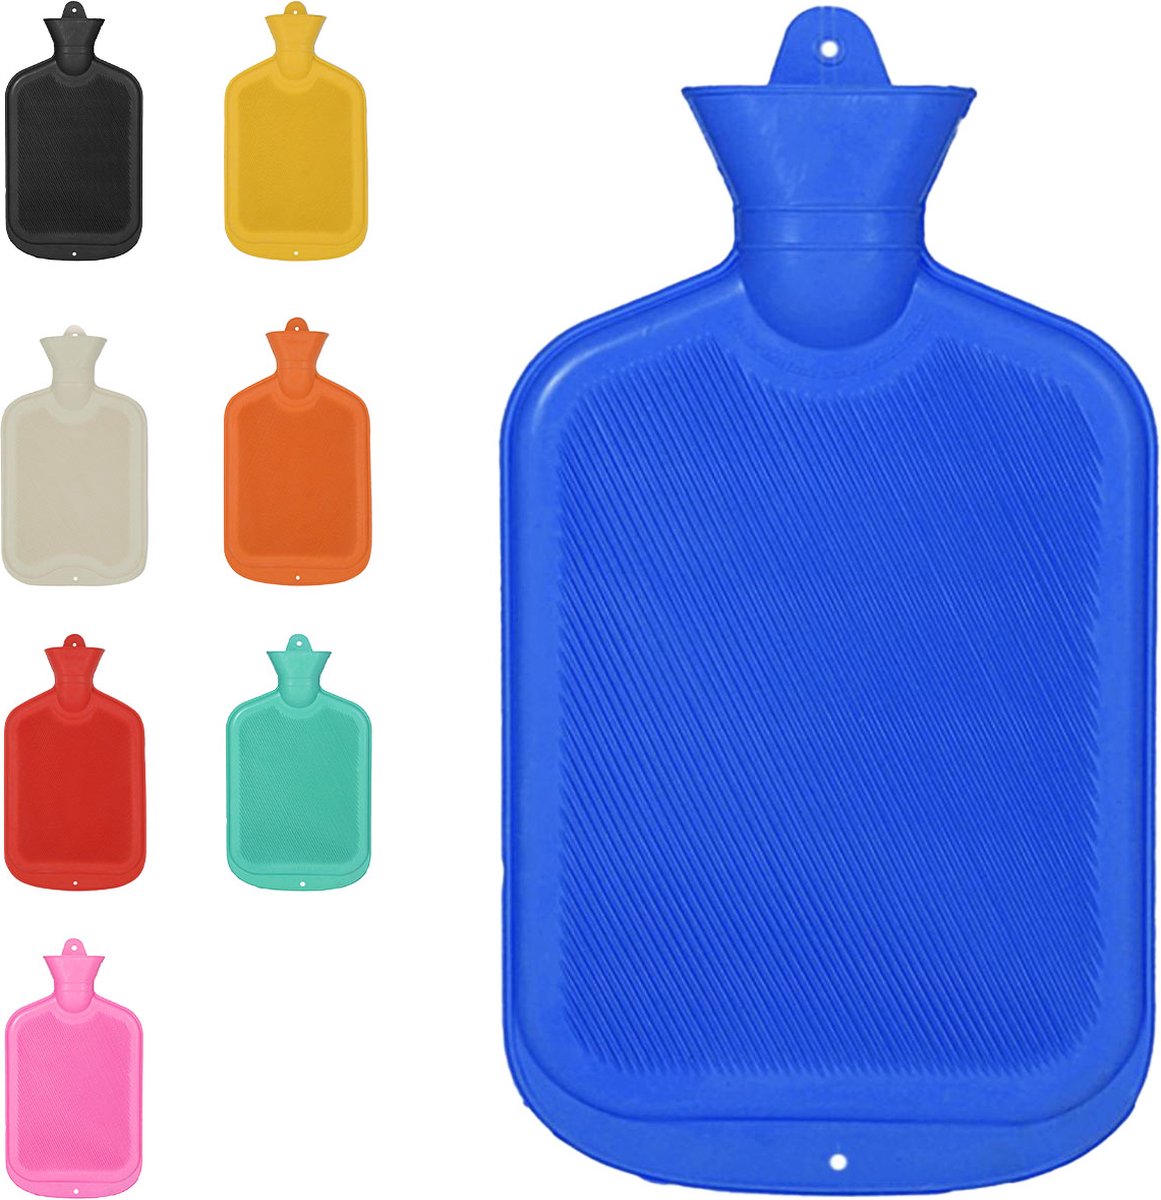 Warmtekruik | Kruik | Warmwaterkruik | Rubber | 2 liter | Blauw | Able & Borret